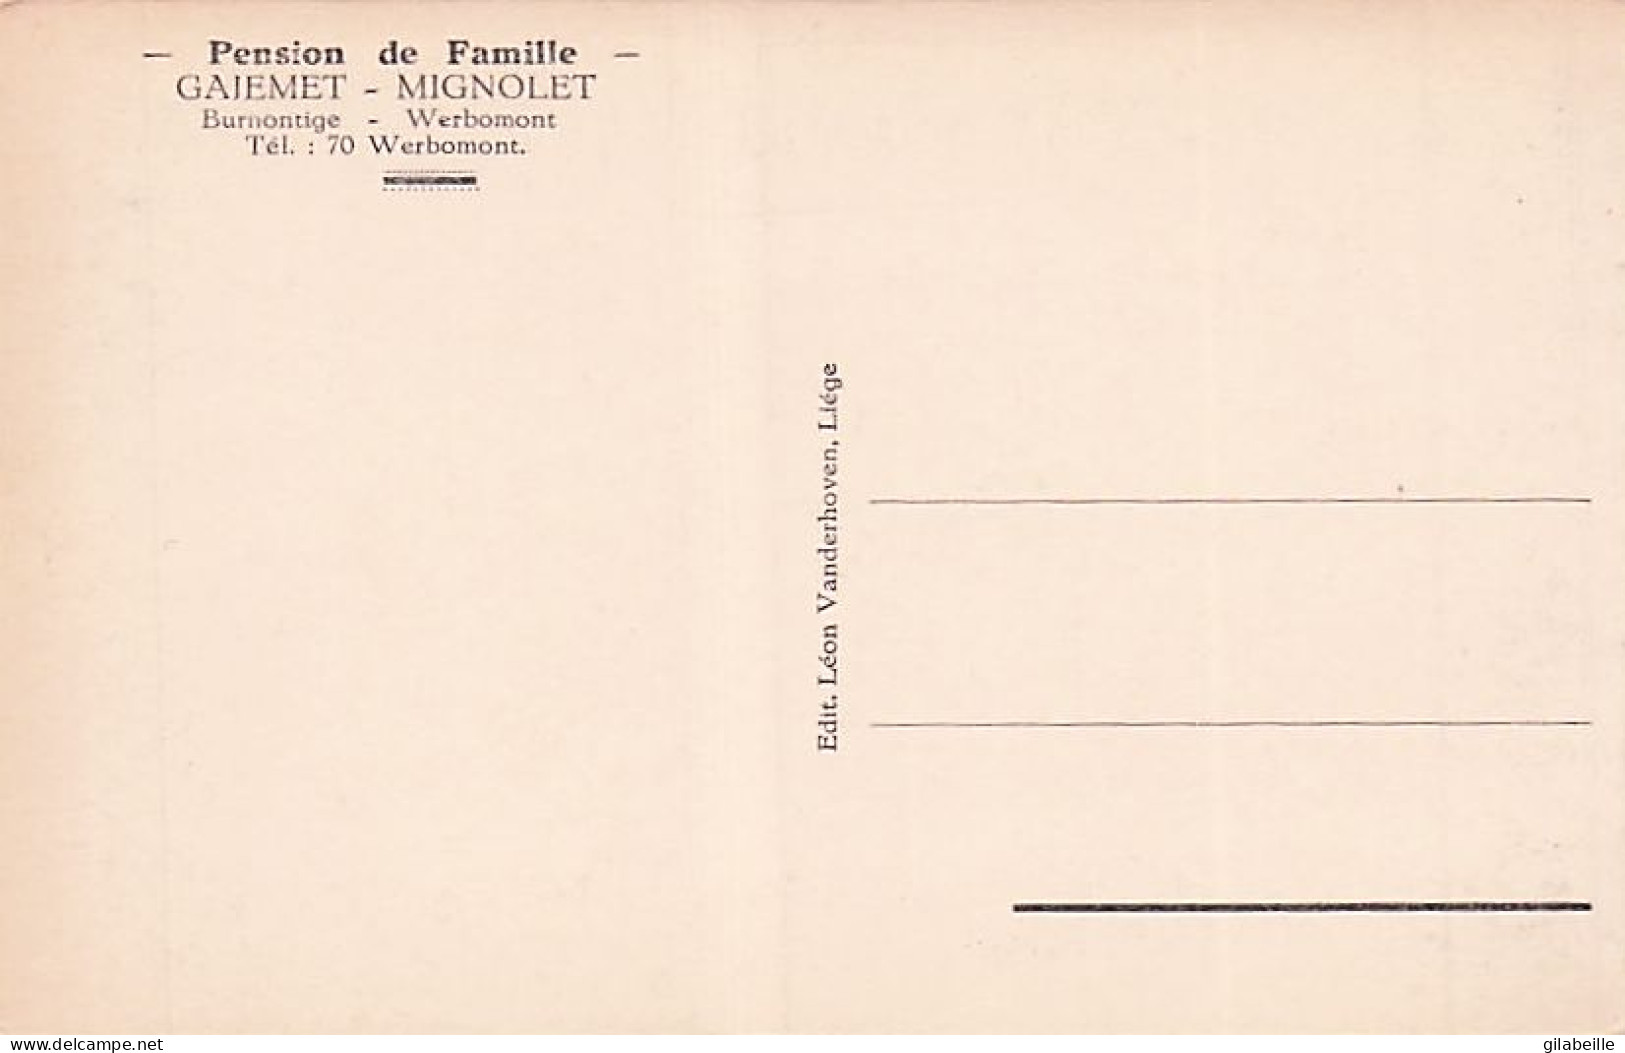 Ferrieres - BURNONTIGE -  Pension De Famille  - Gaiemet - Mignolet - Ferrieres